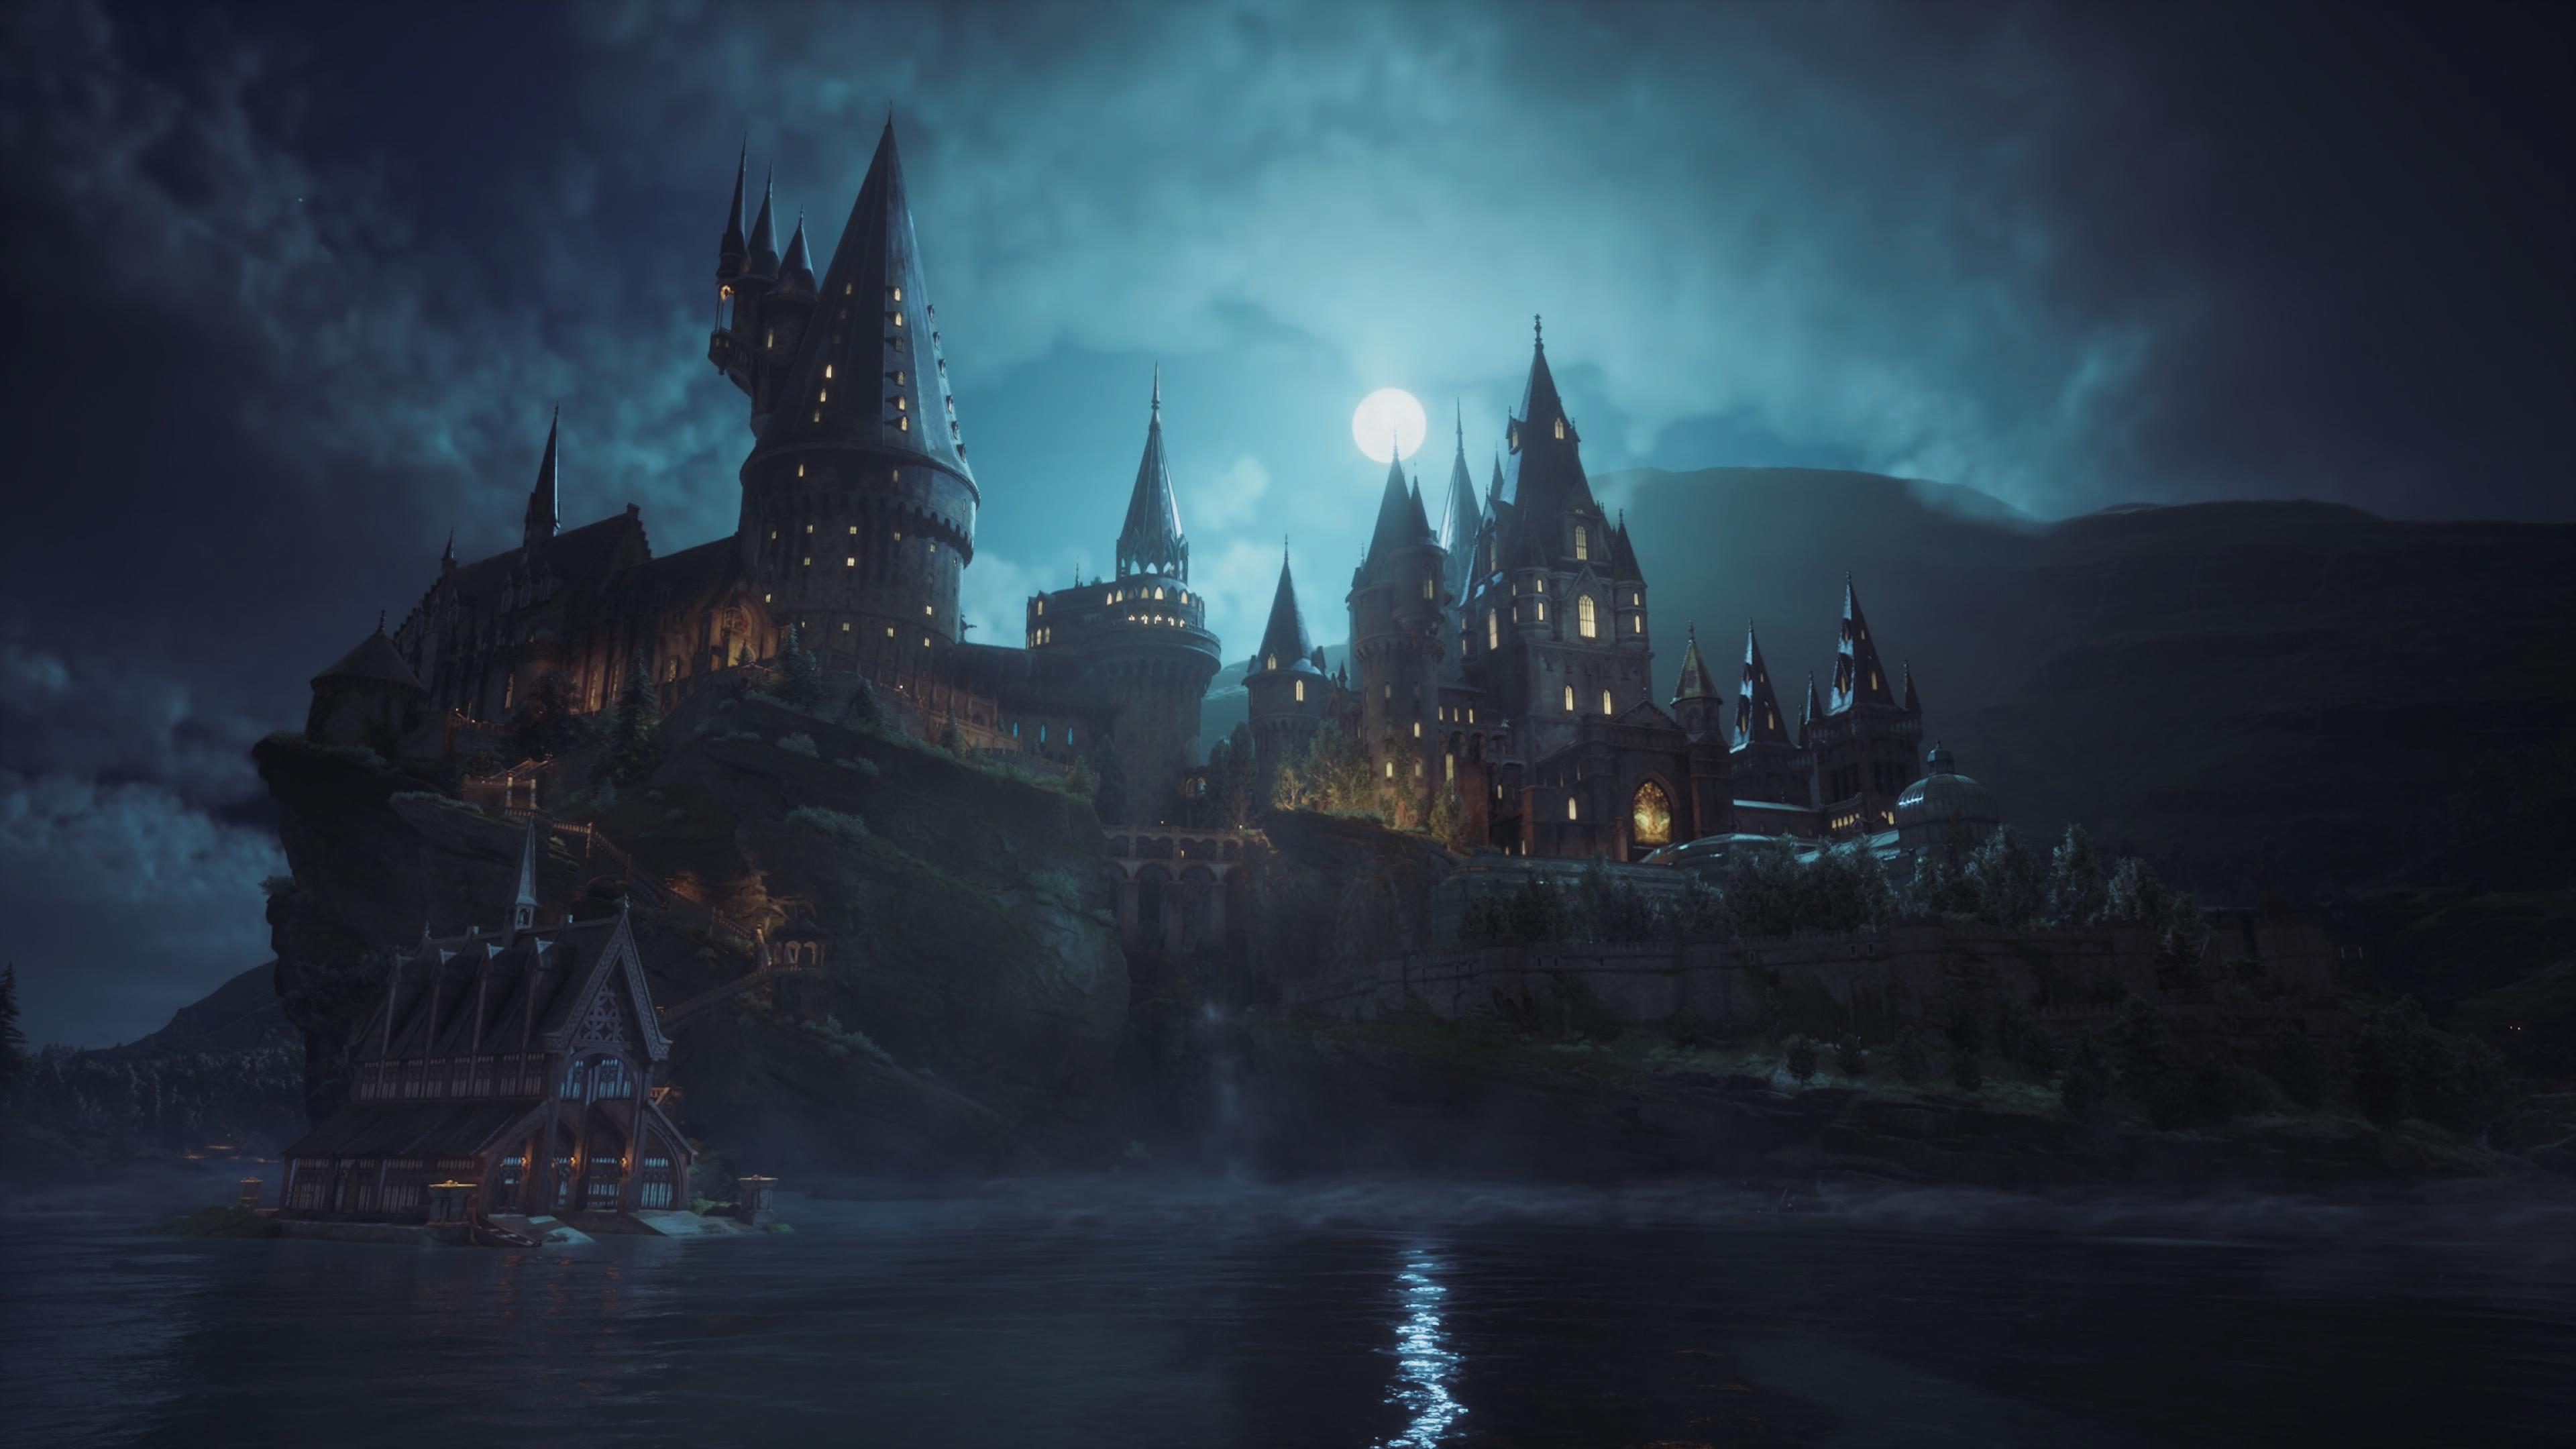 Hogwarts Legacy Gameplay - Hogsmeade Exploration (Harry Potter Game) 